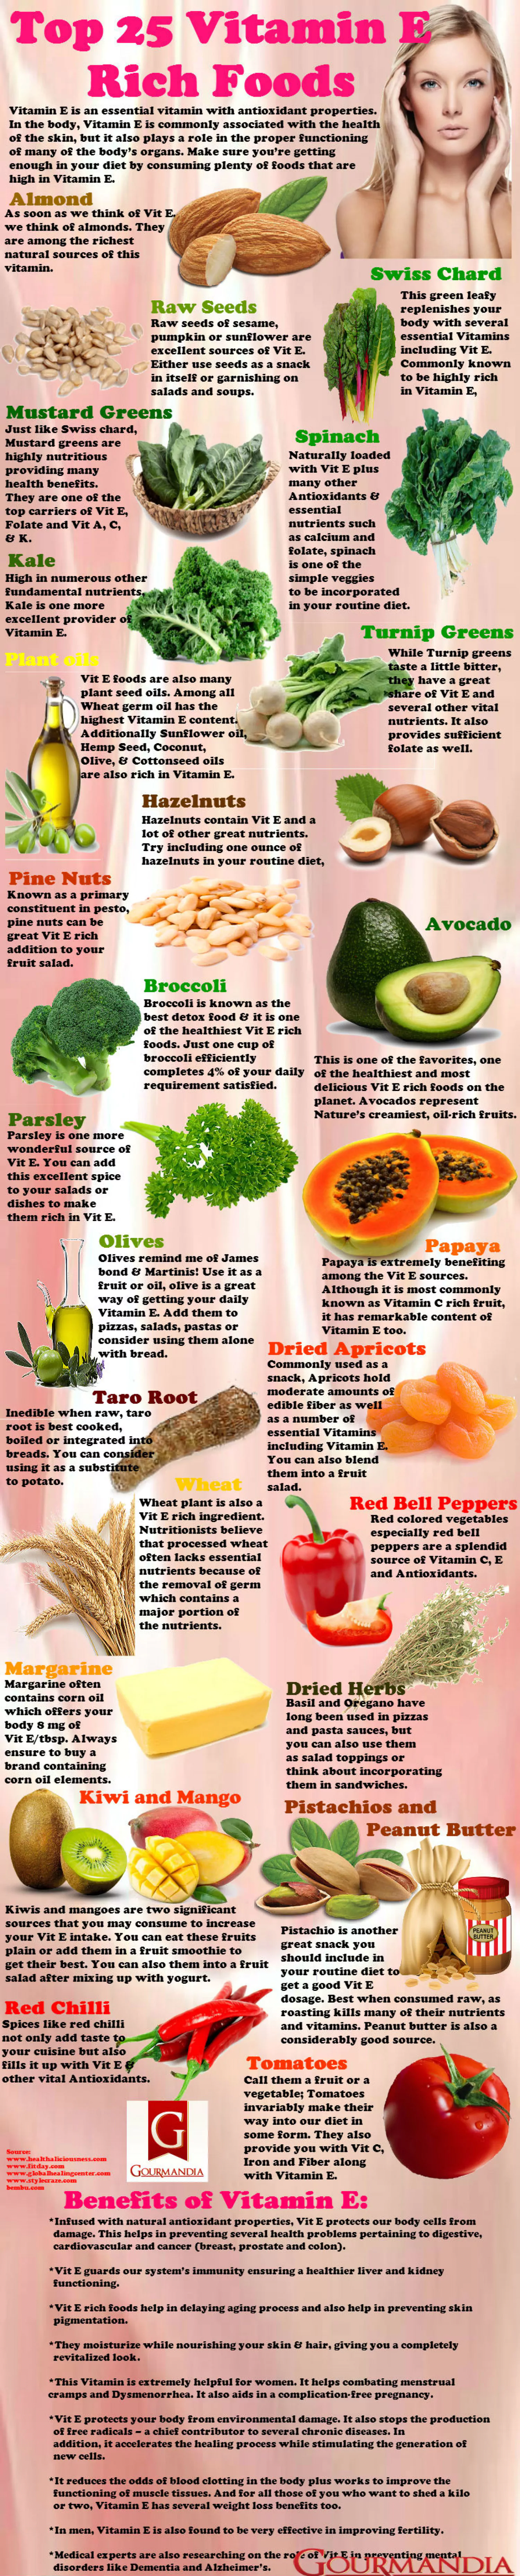 Top 25 Vitamin E Rich Foods